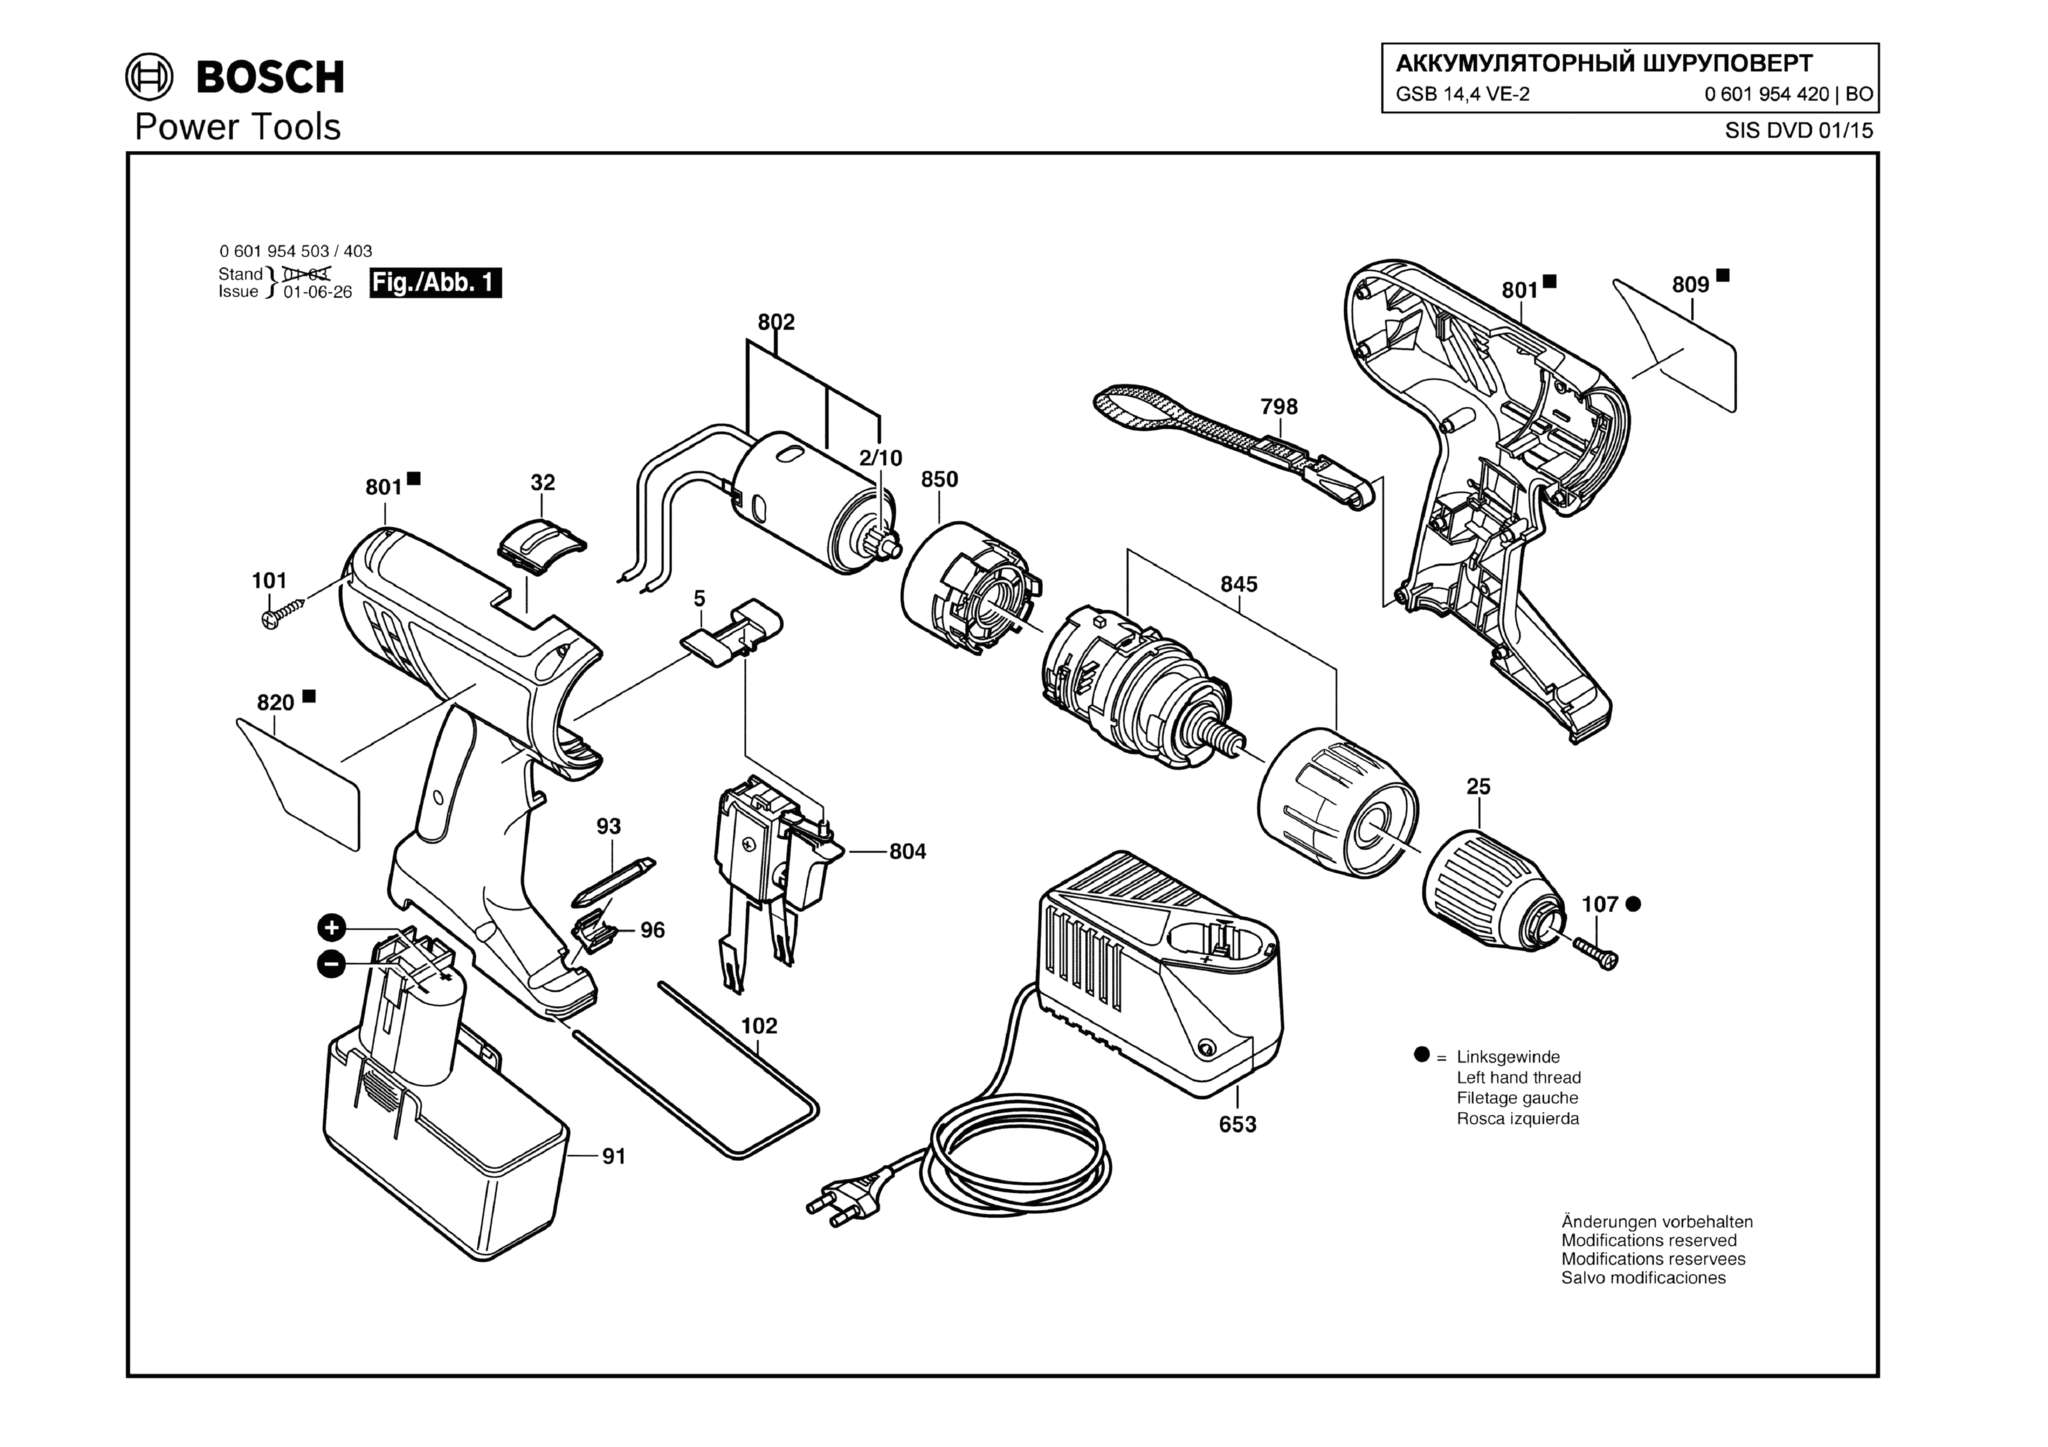 Запчасти, схема и деталировка Bosch GSB 14,4 VE-2 (ТИП 0601954420)